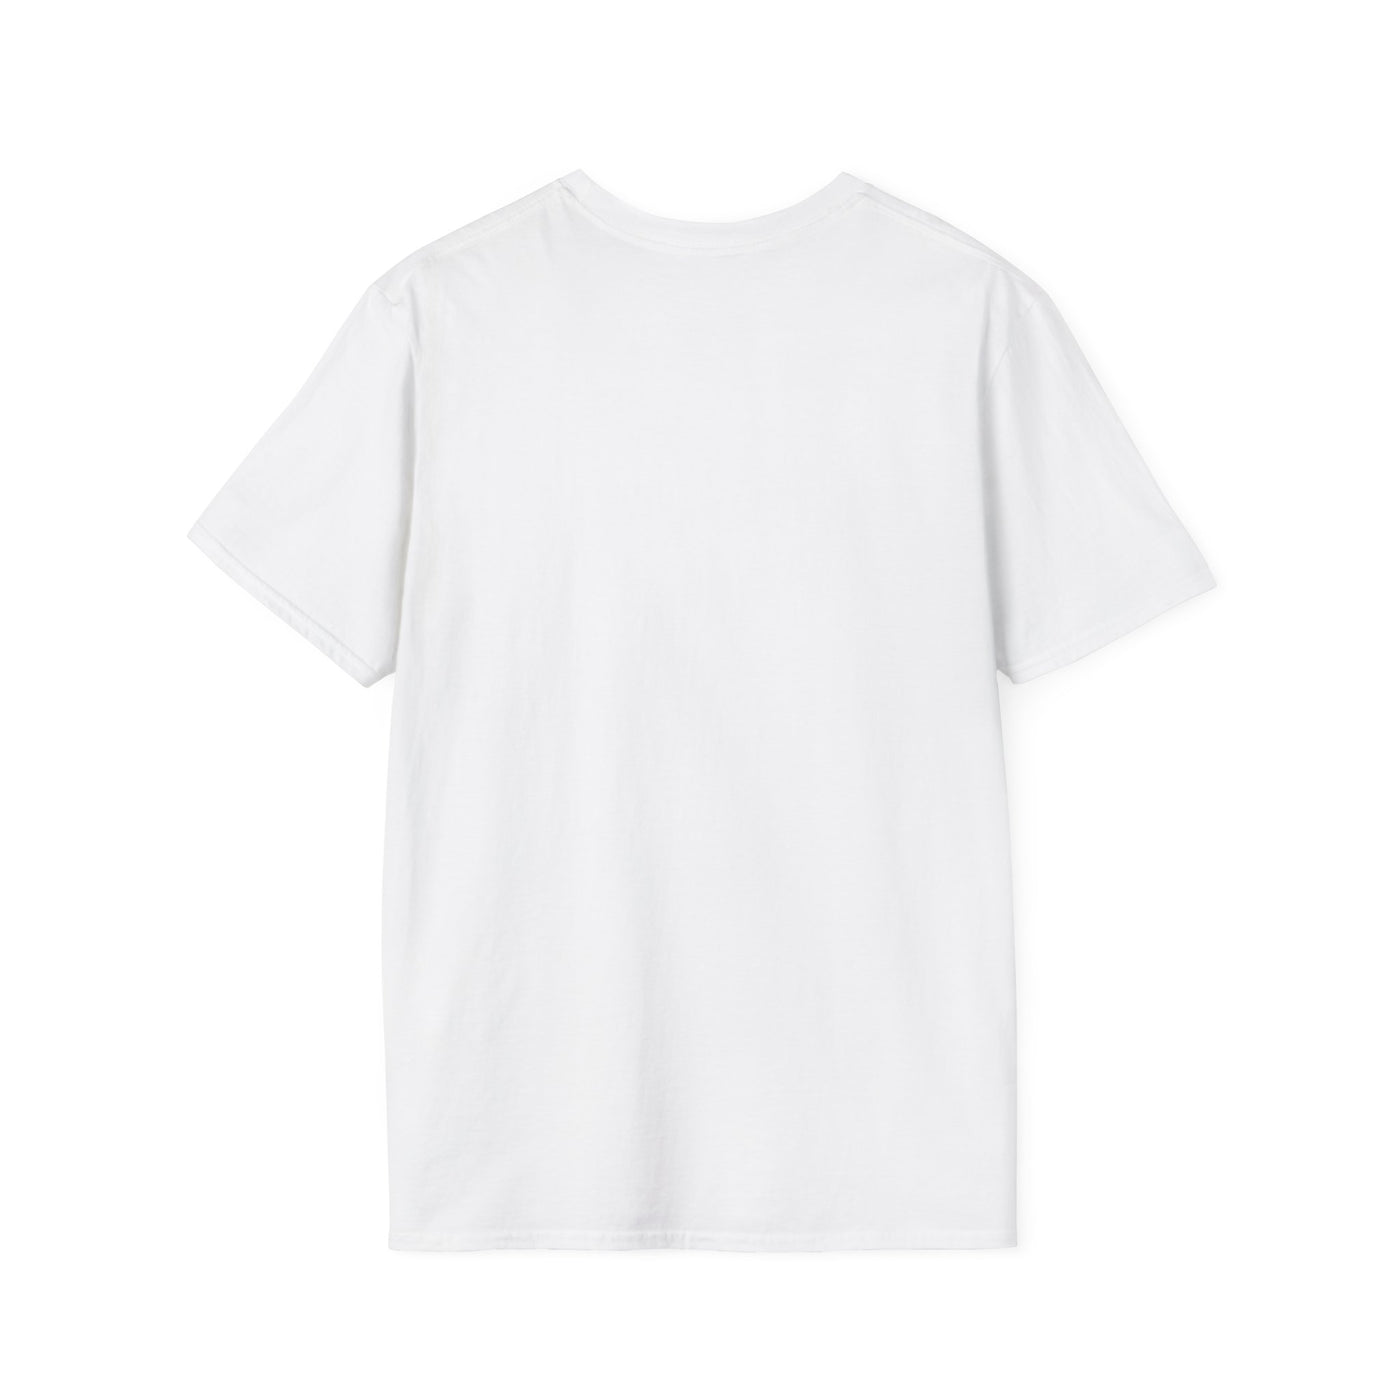 45>46 Unisex T-Shirt